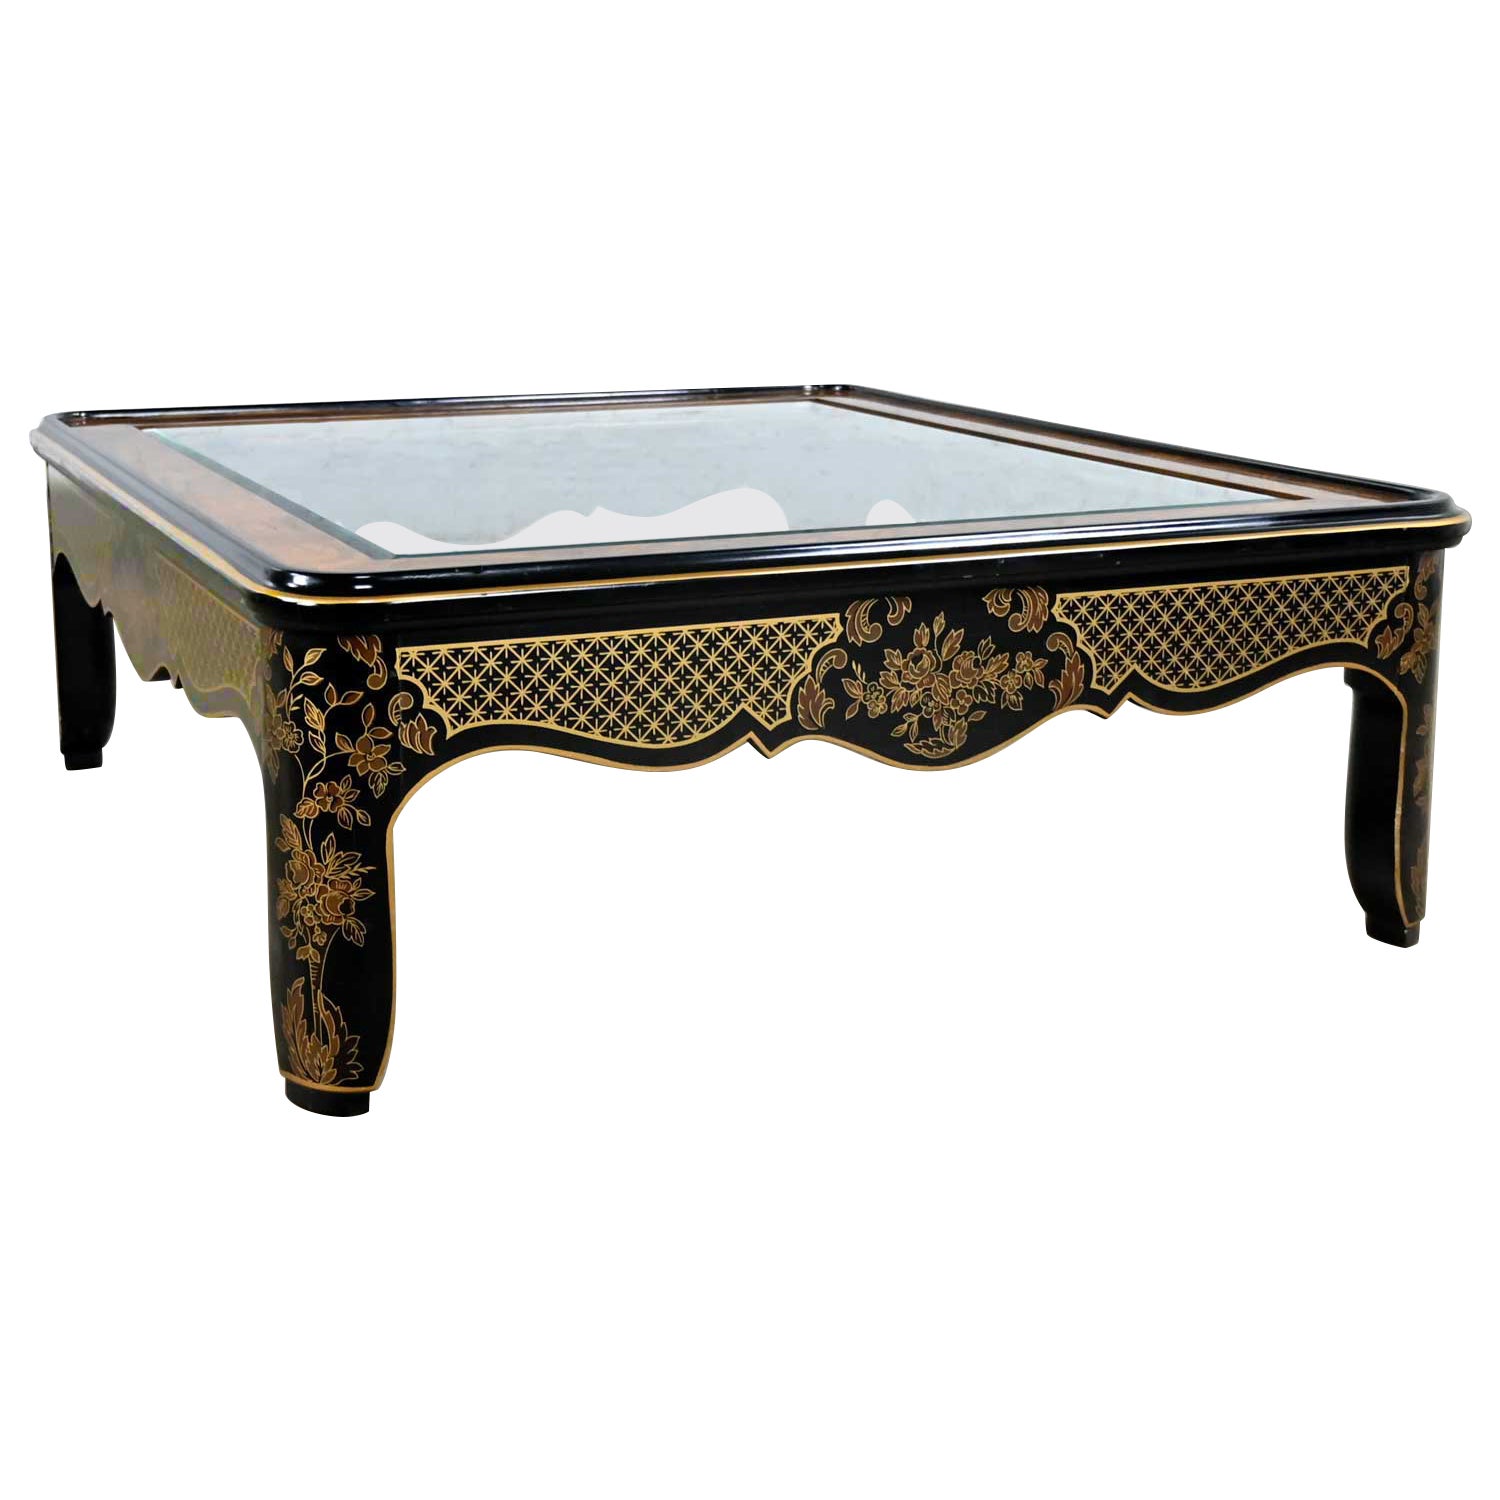 Drexel Heritage ET Cetera Collection Chinoiserie Table basse en loupe d'or noire